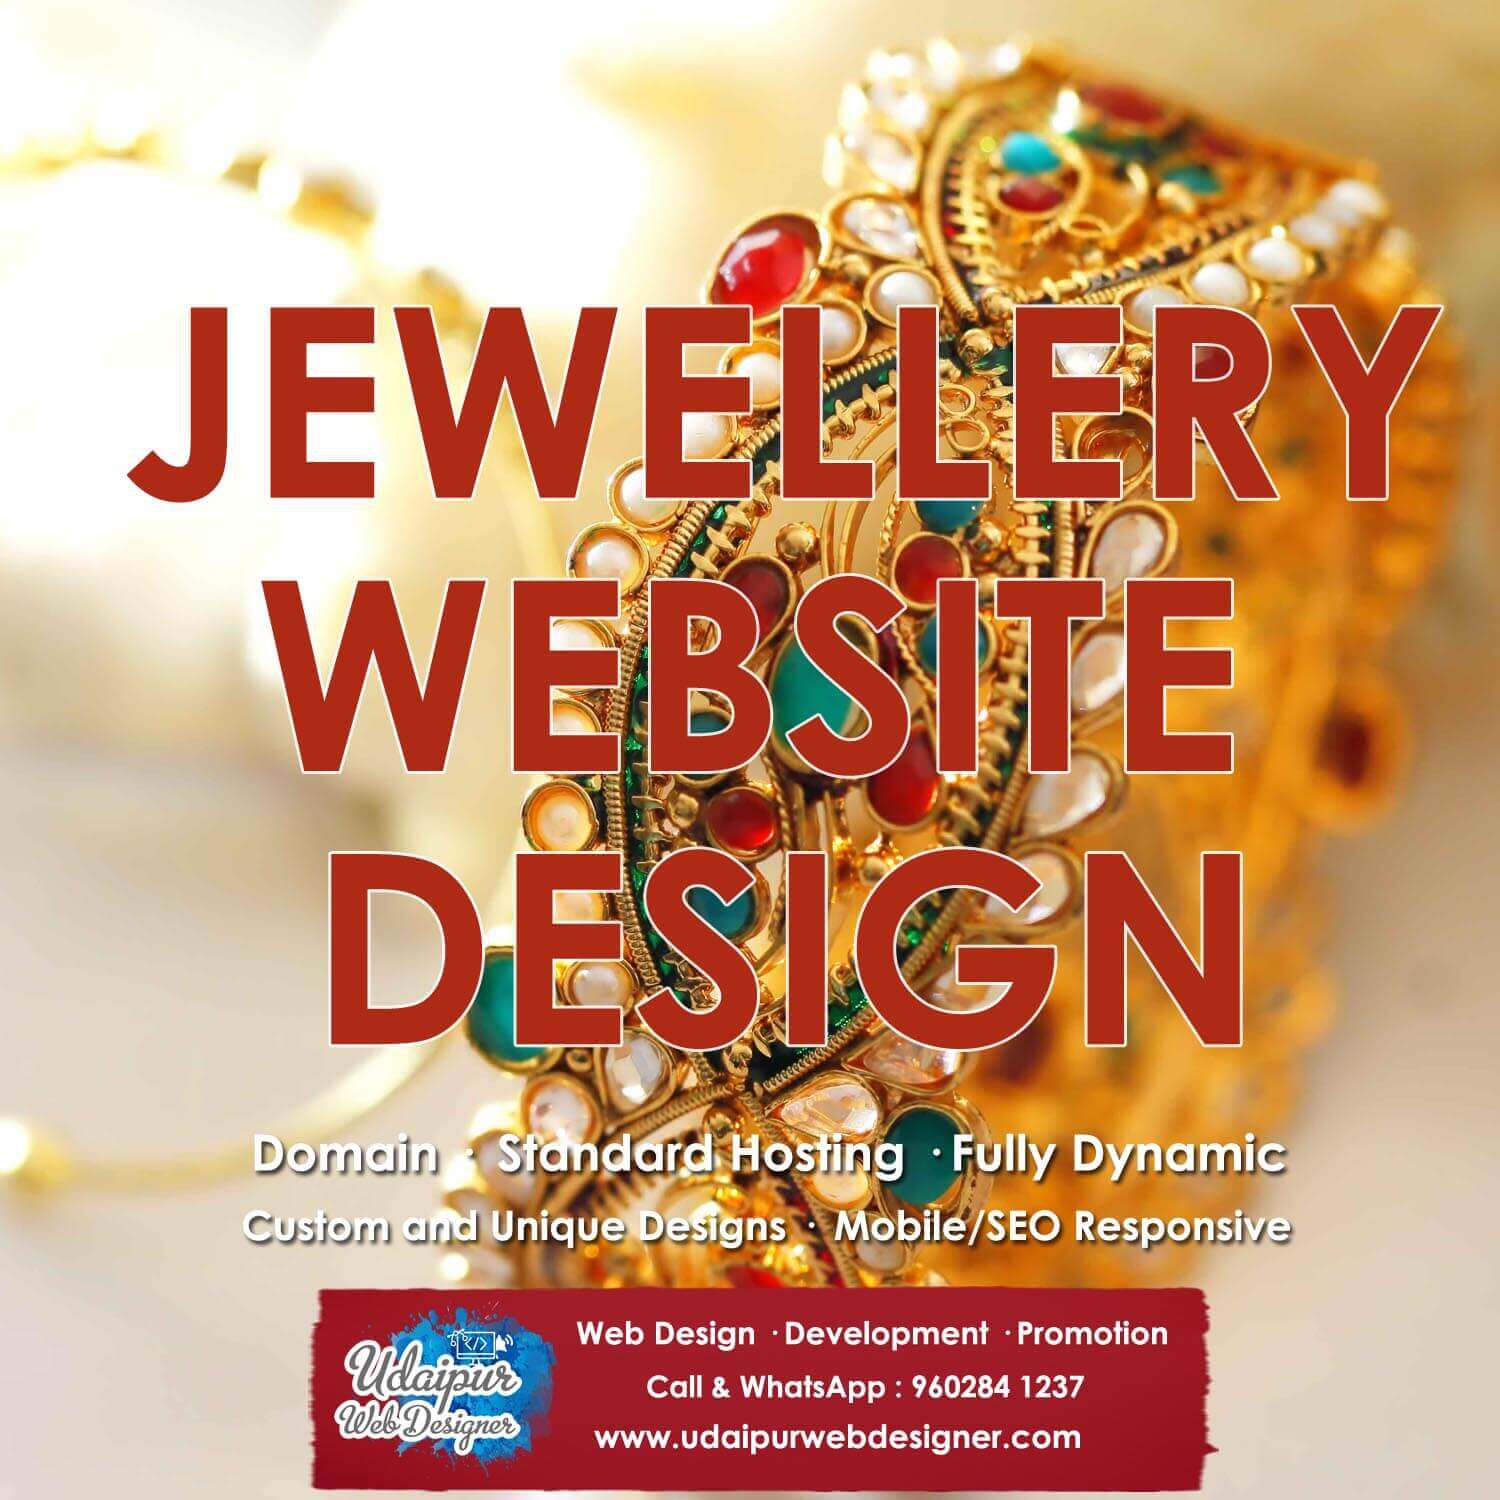 Jewellery-Website-Design-SEO